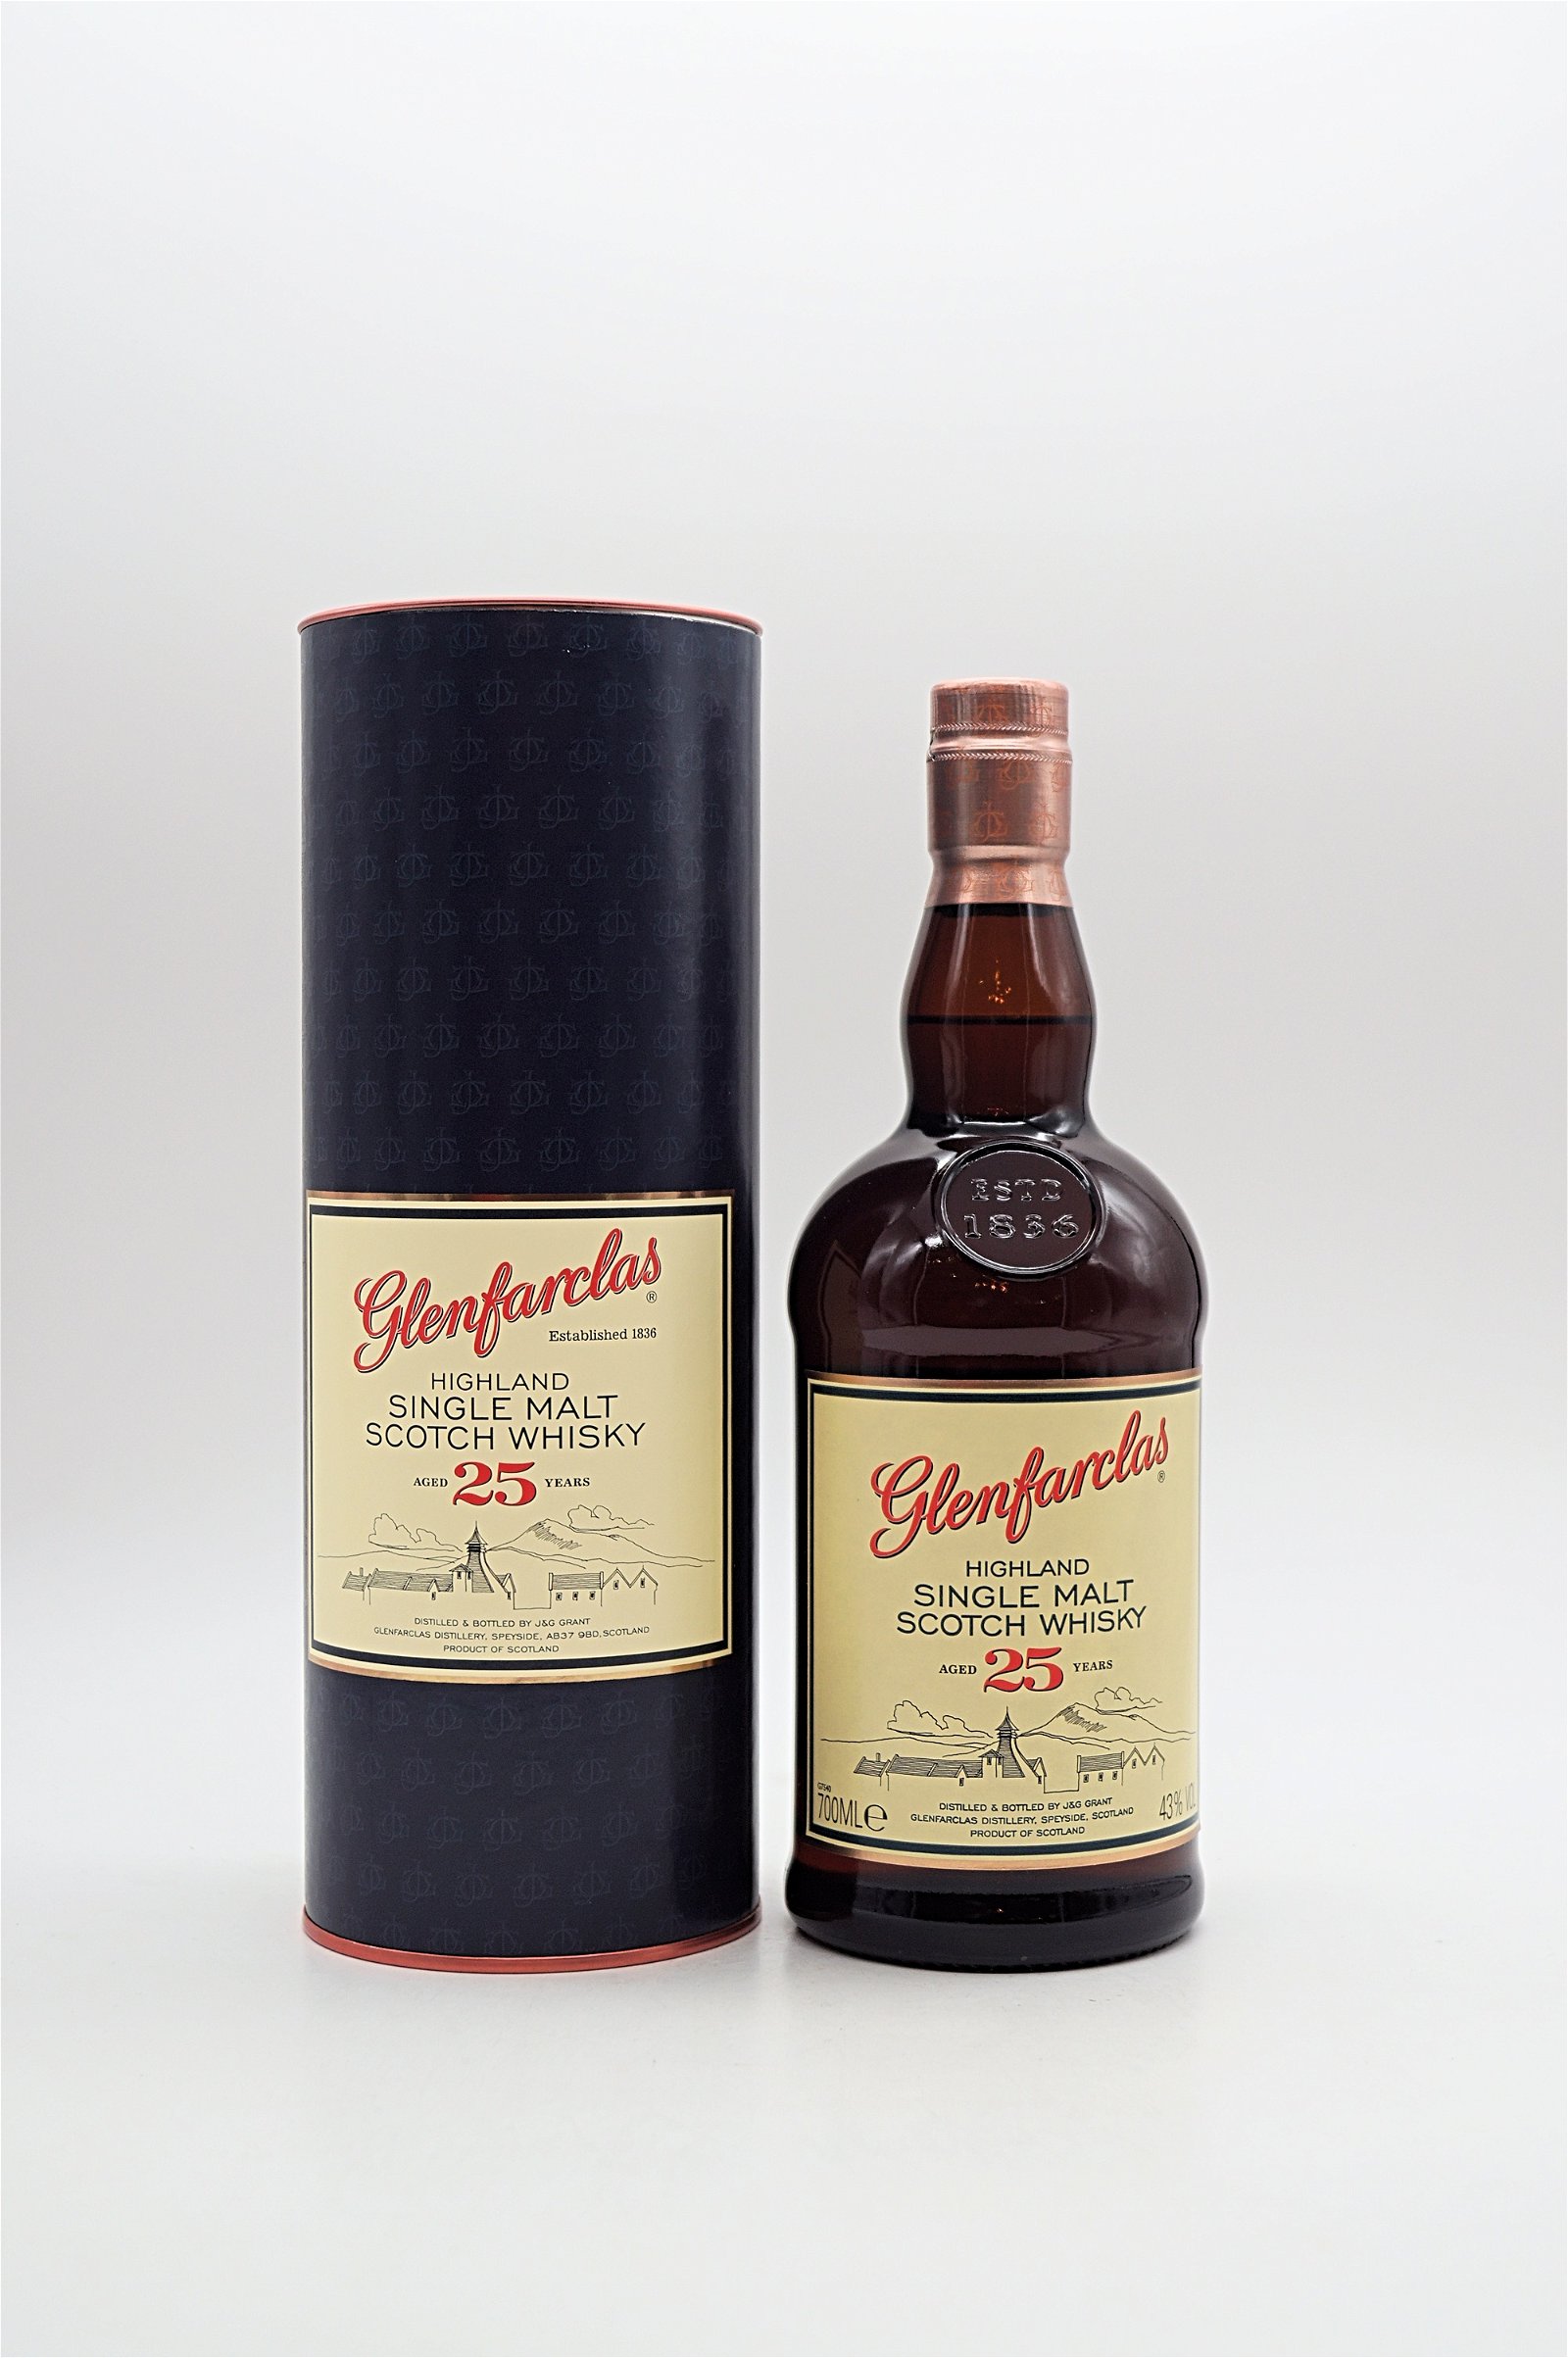 Glenfarclas 25 Years Highland Single Malt Scotch Whisky